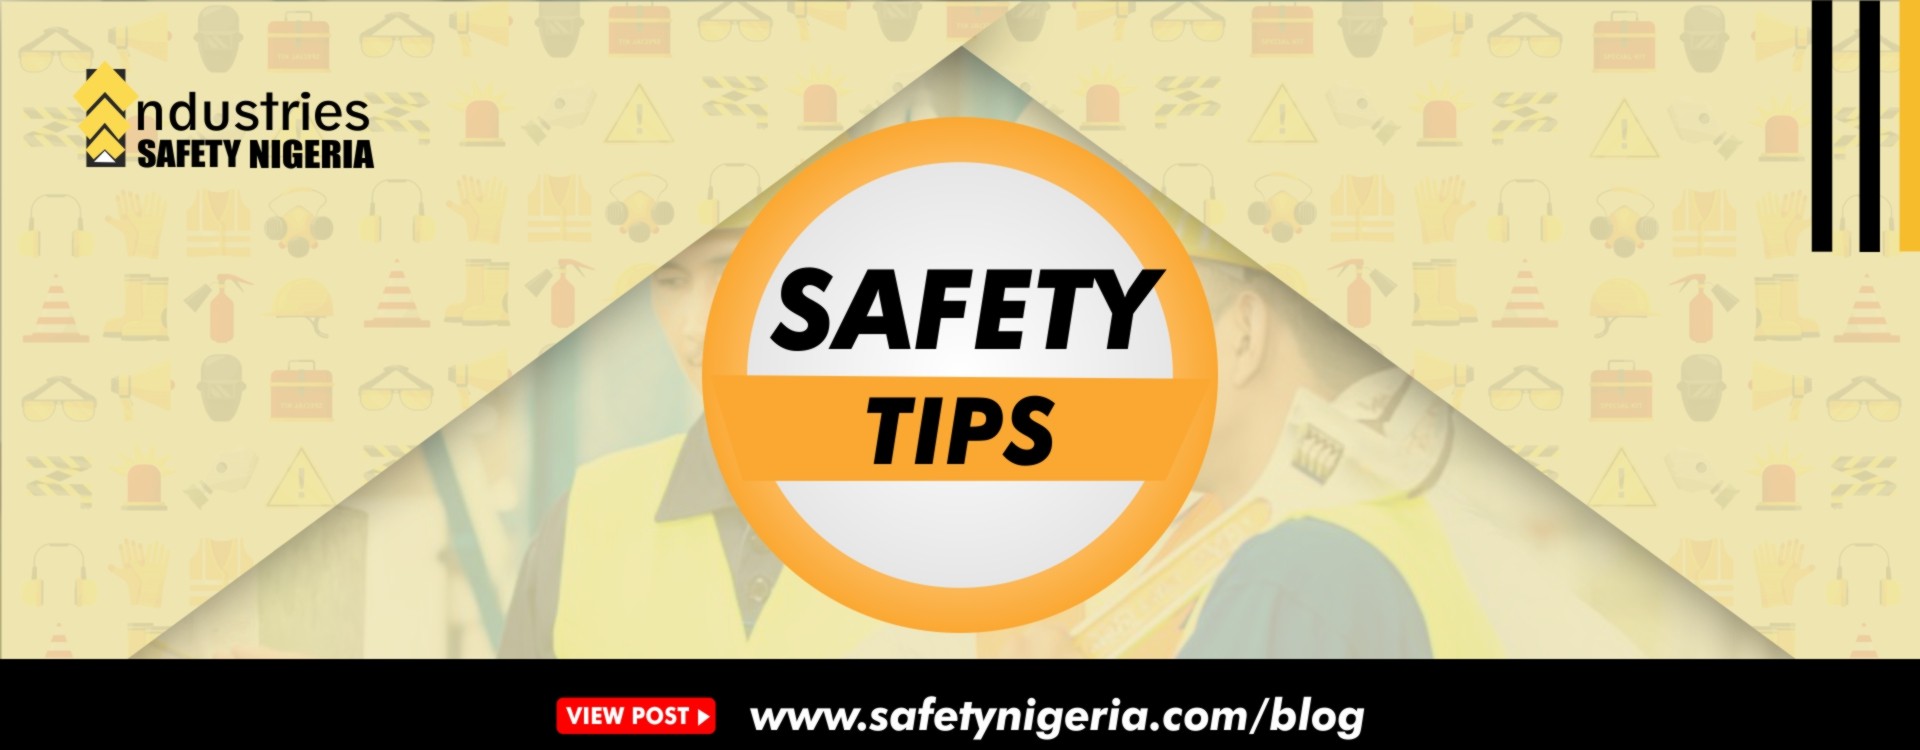 Safety & Health Posts